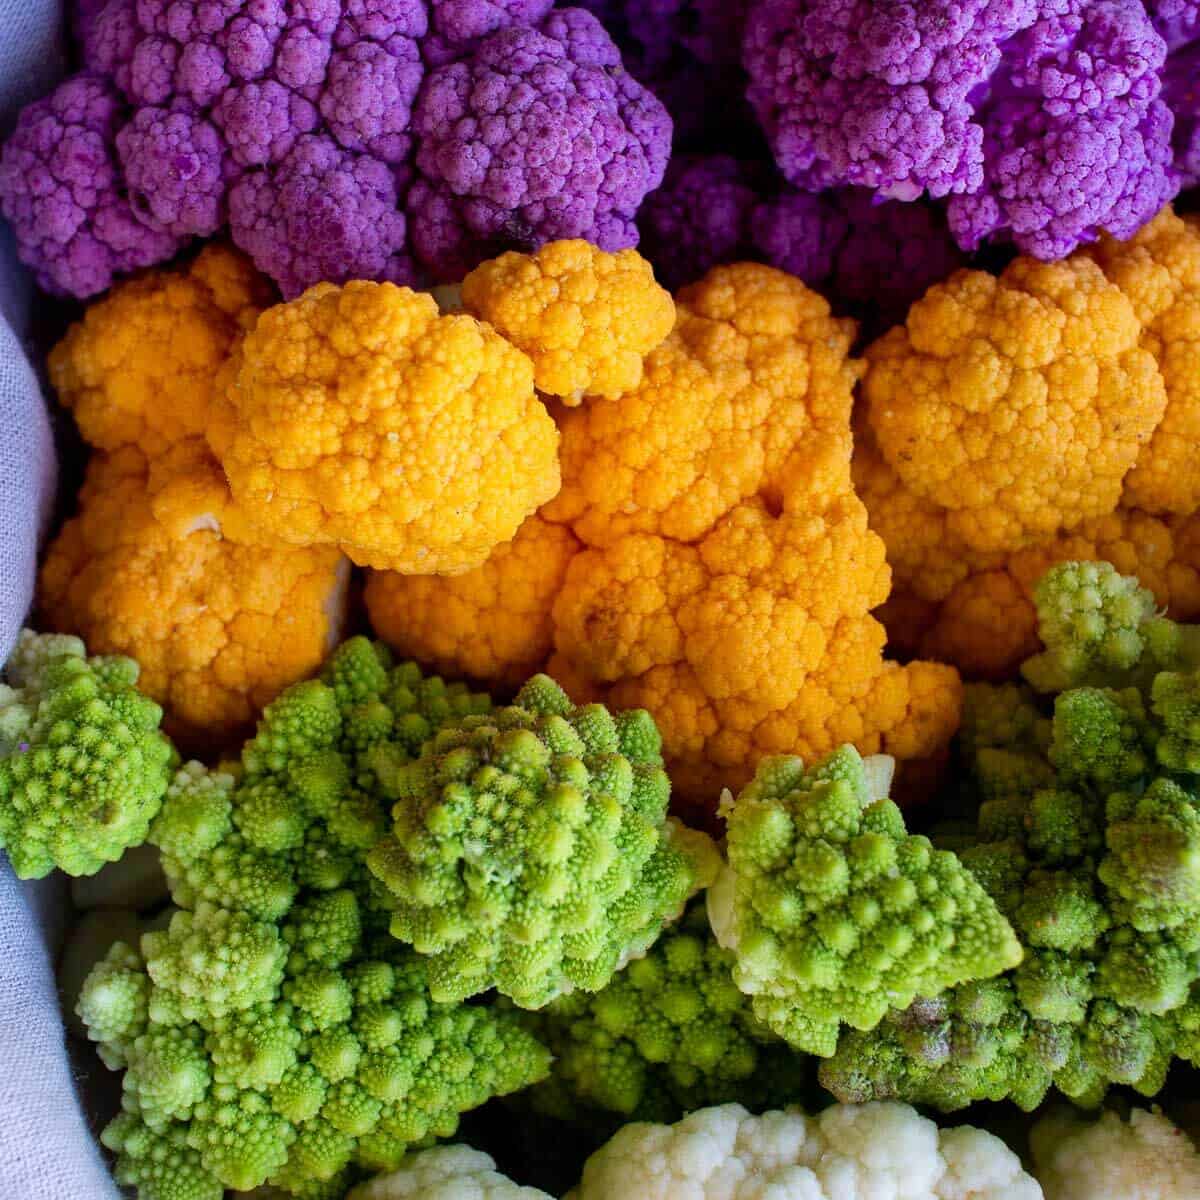 Colorful Broccoli and Cauliflowers